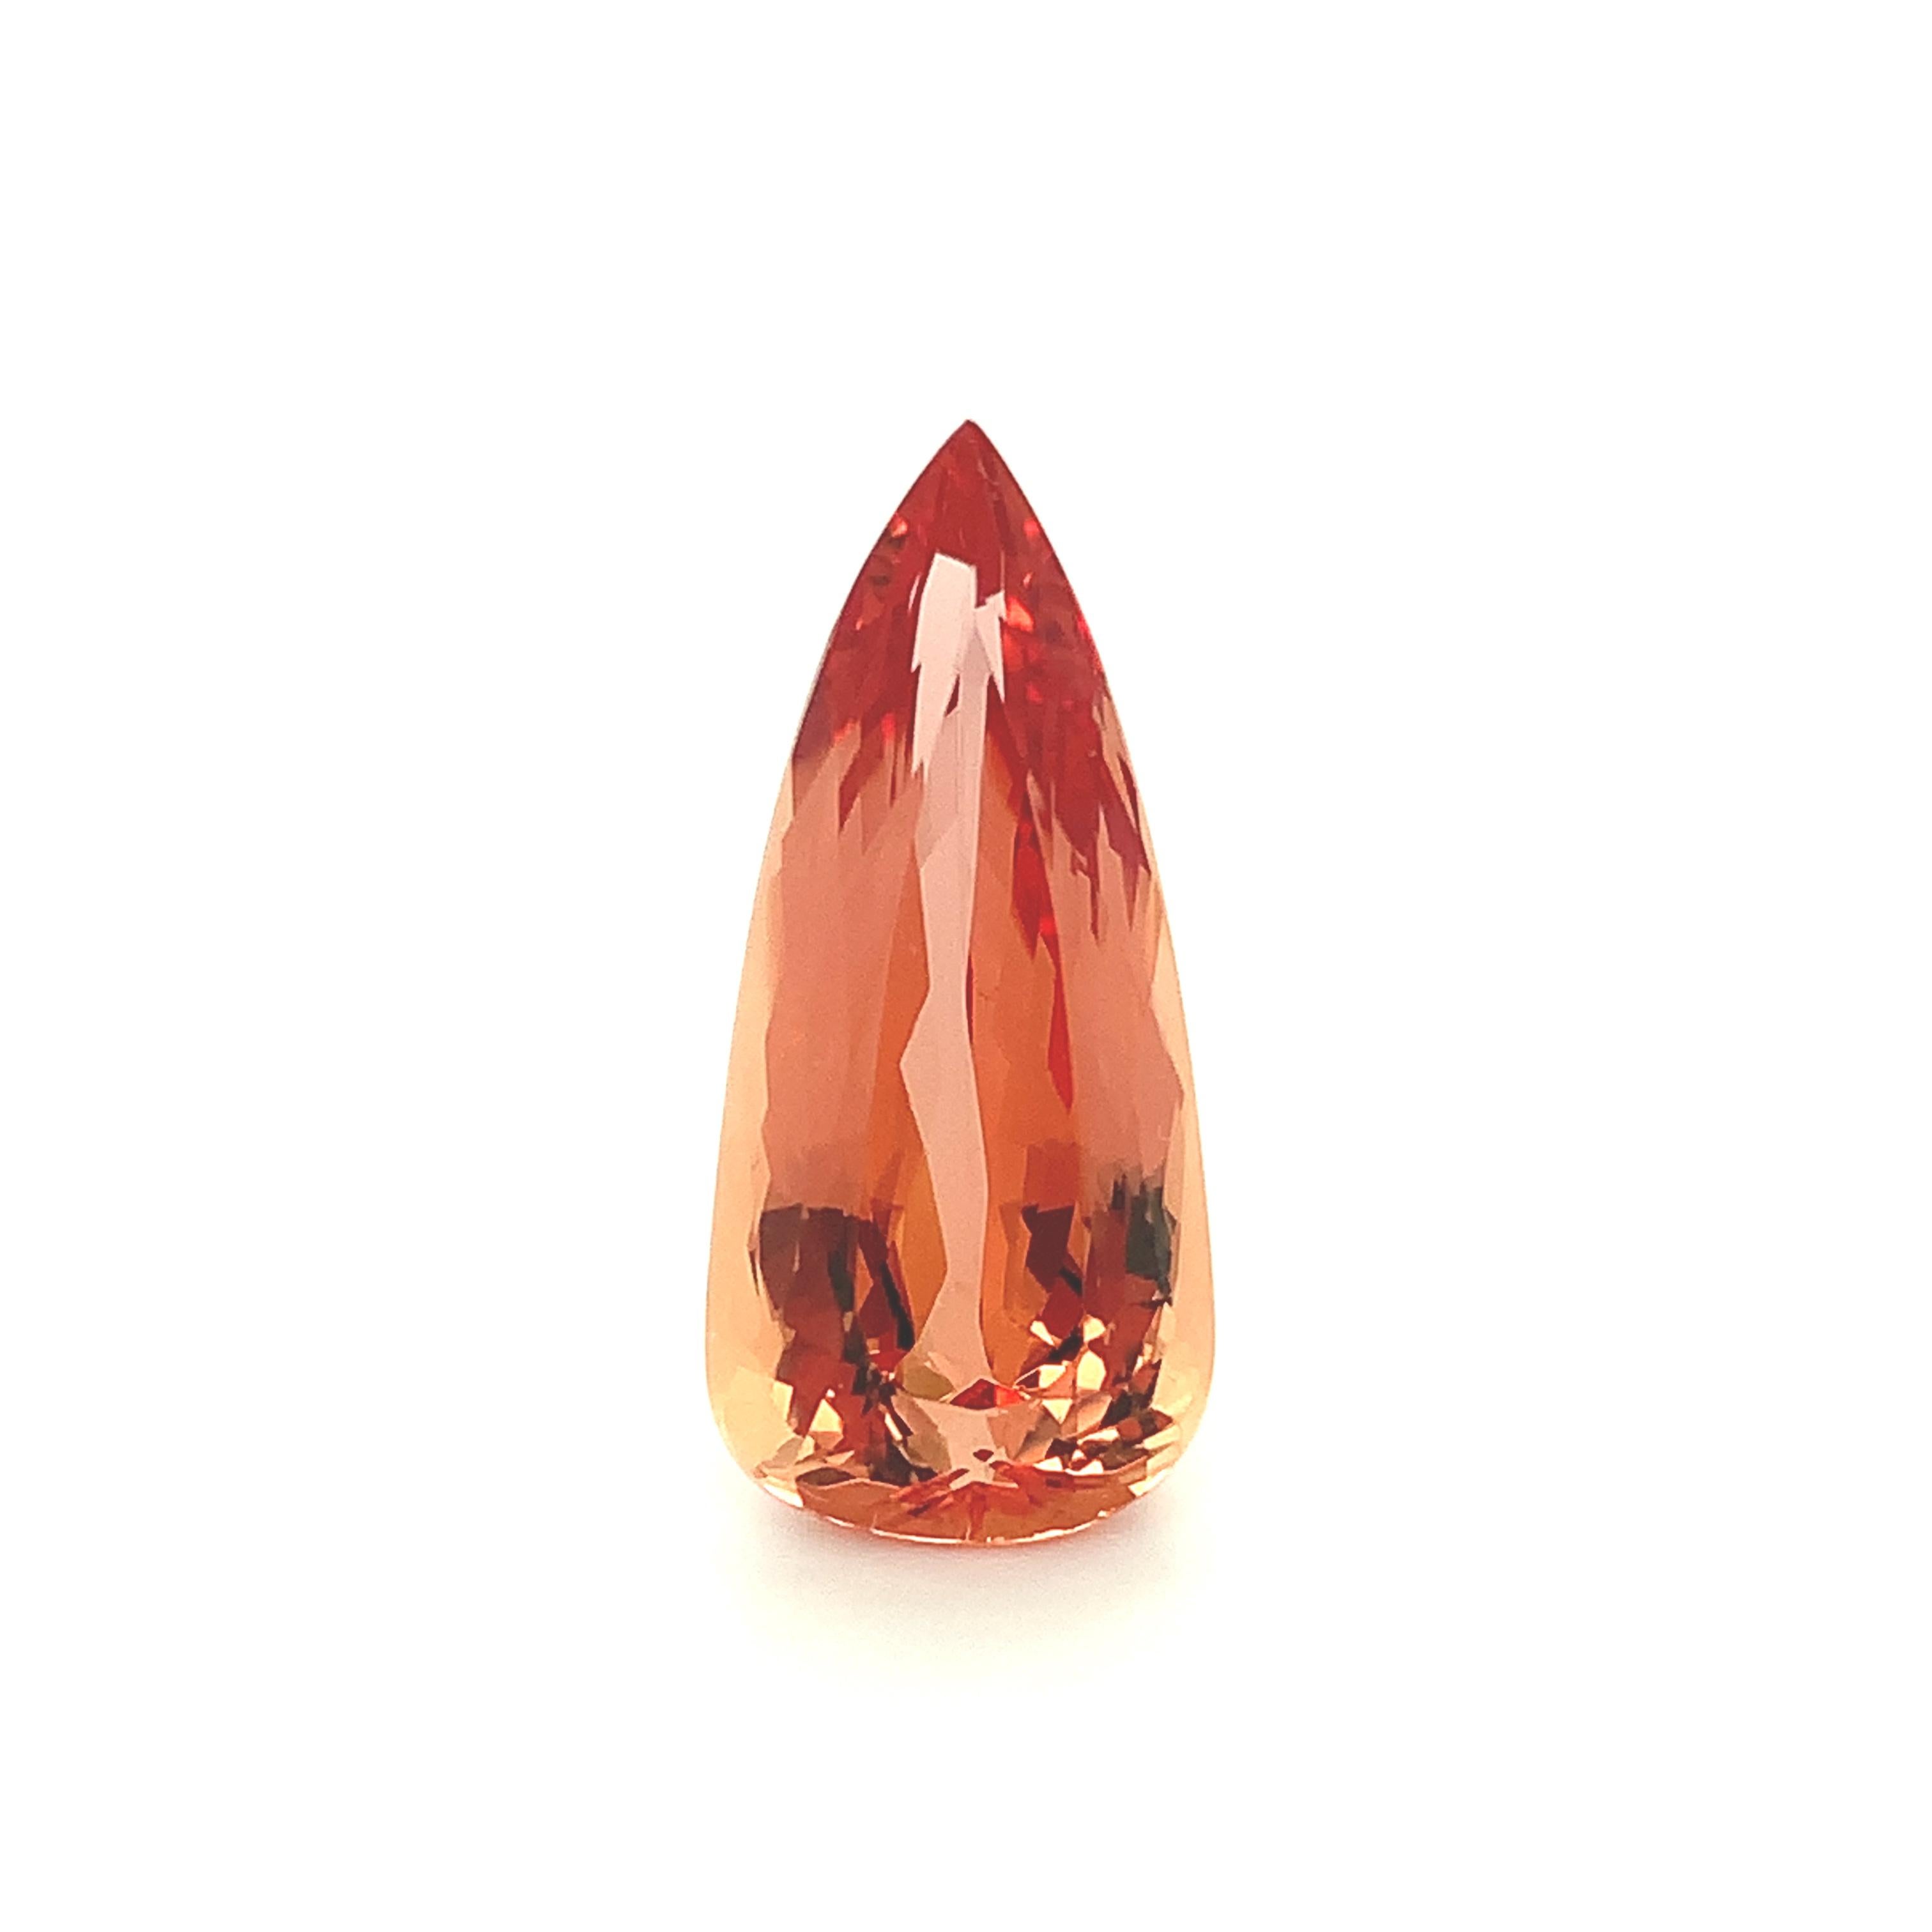 Artisan Topaze impériale orange 15,90 carats, pierre précieuse non sertie, certifiée GIA en vente